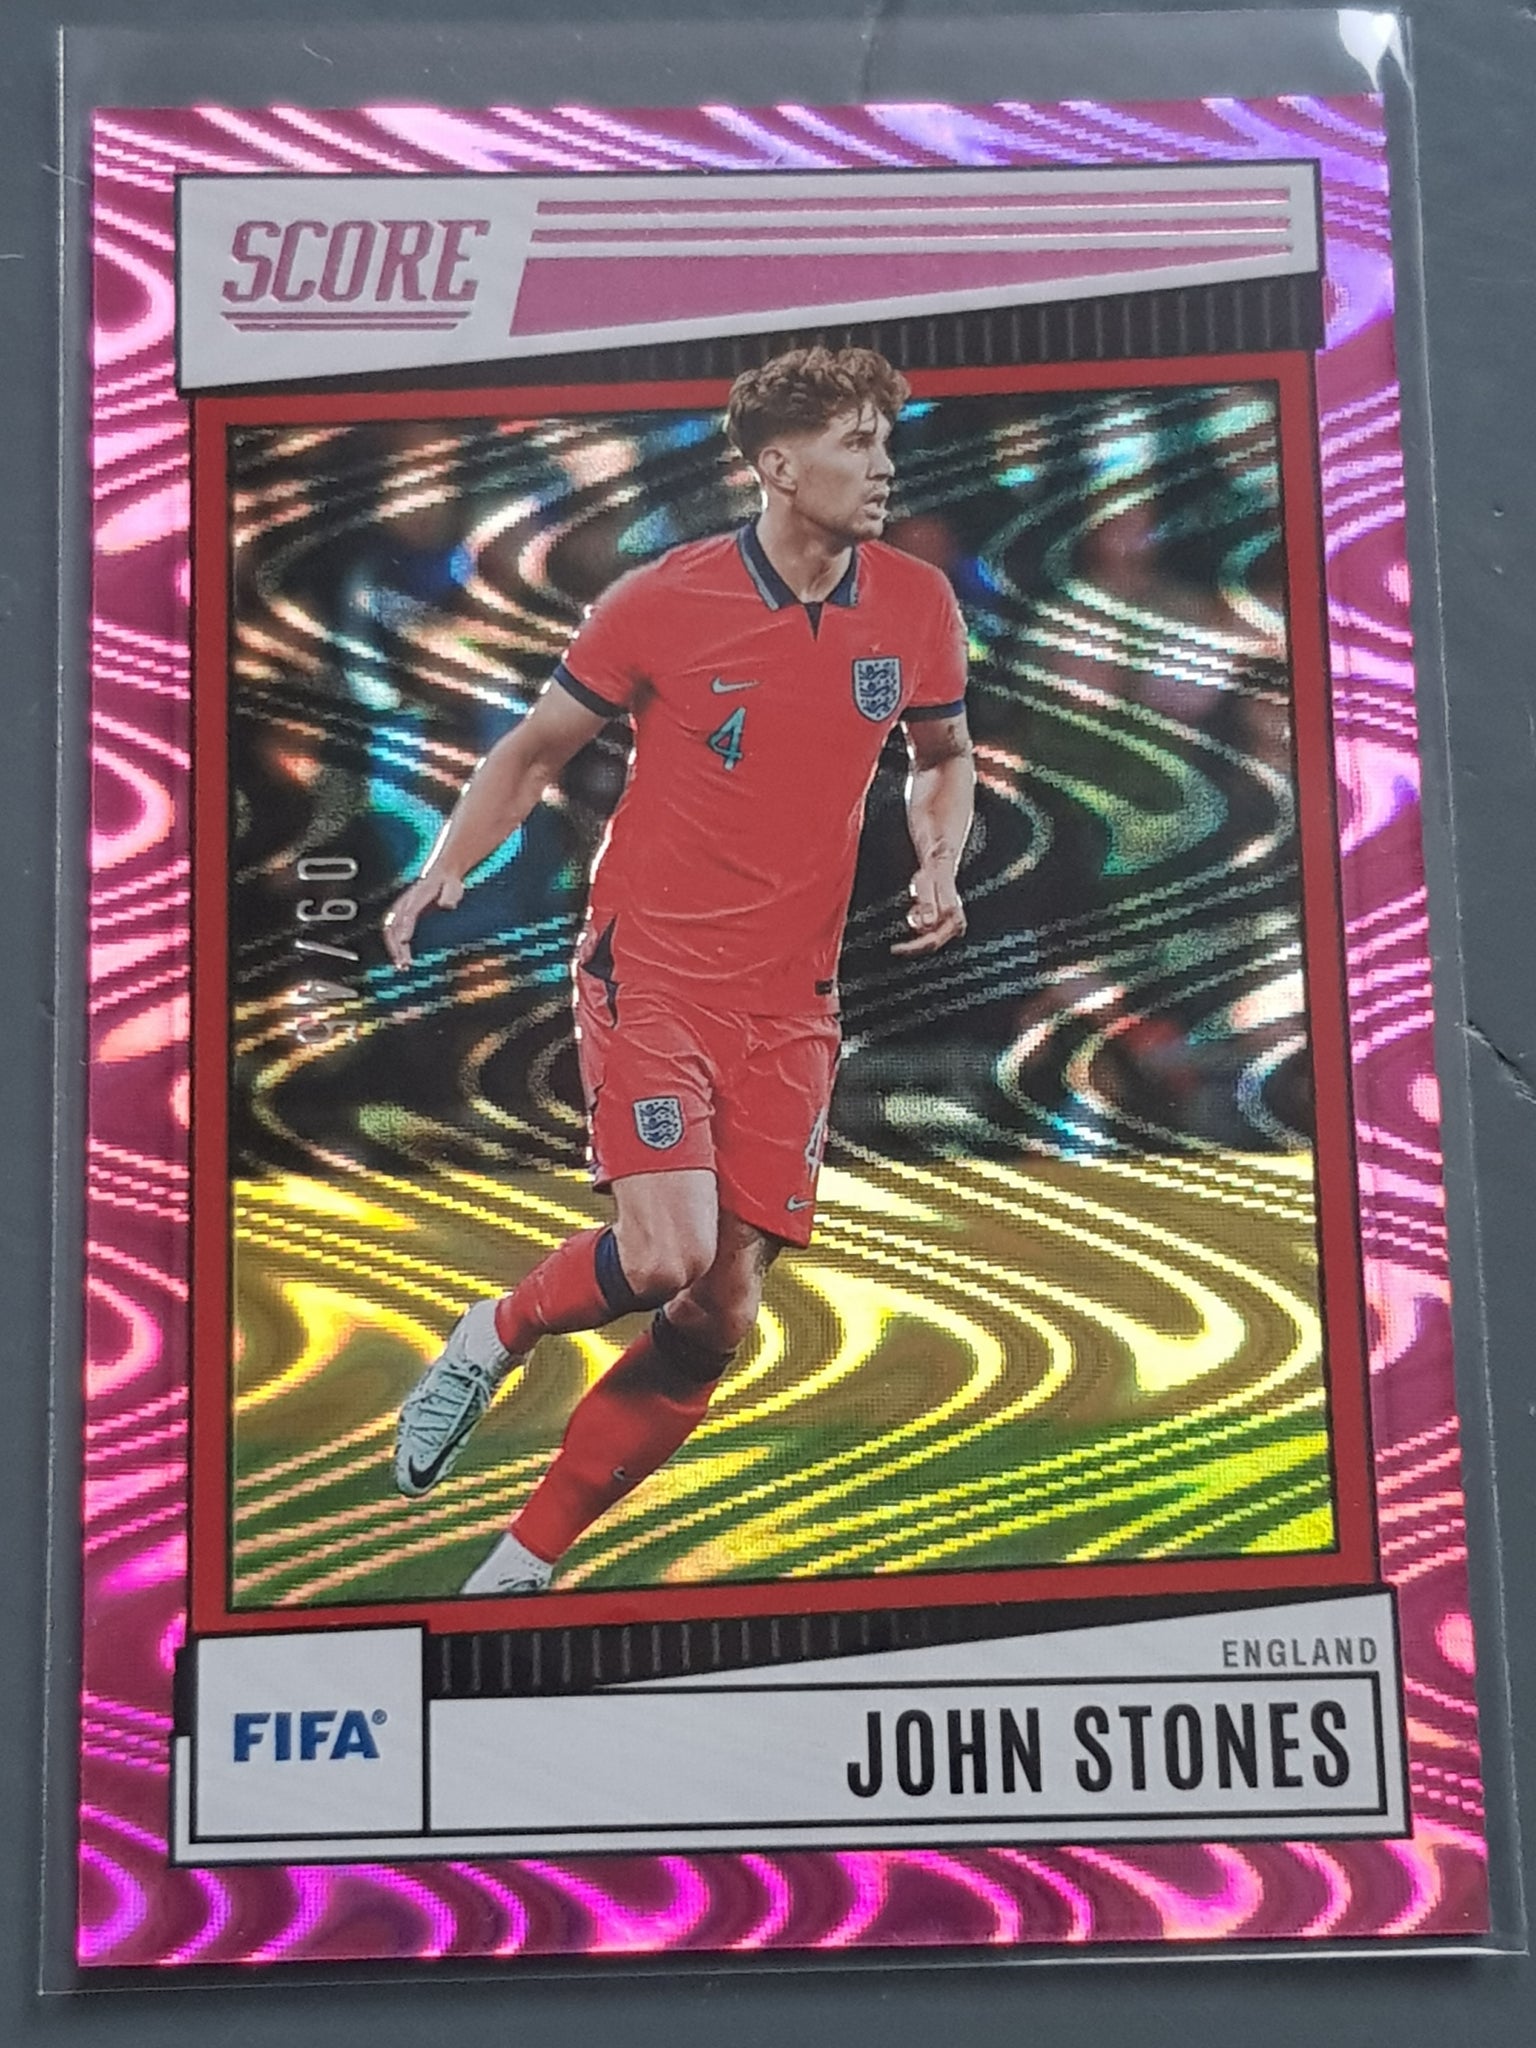 2022-23 Panini Score FIFA John Stones #46 Pink Swirl Parallel /45 Trading Card